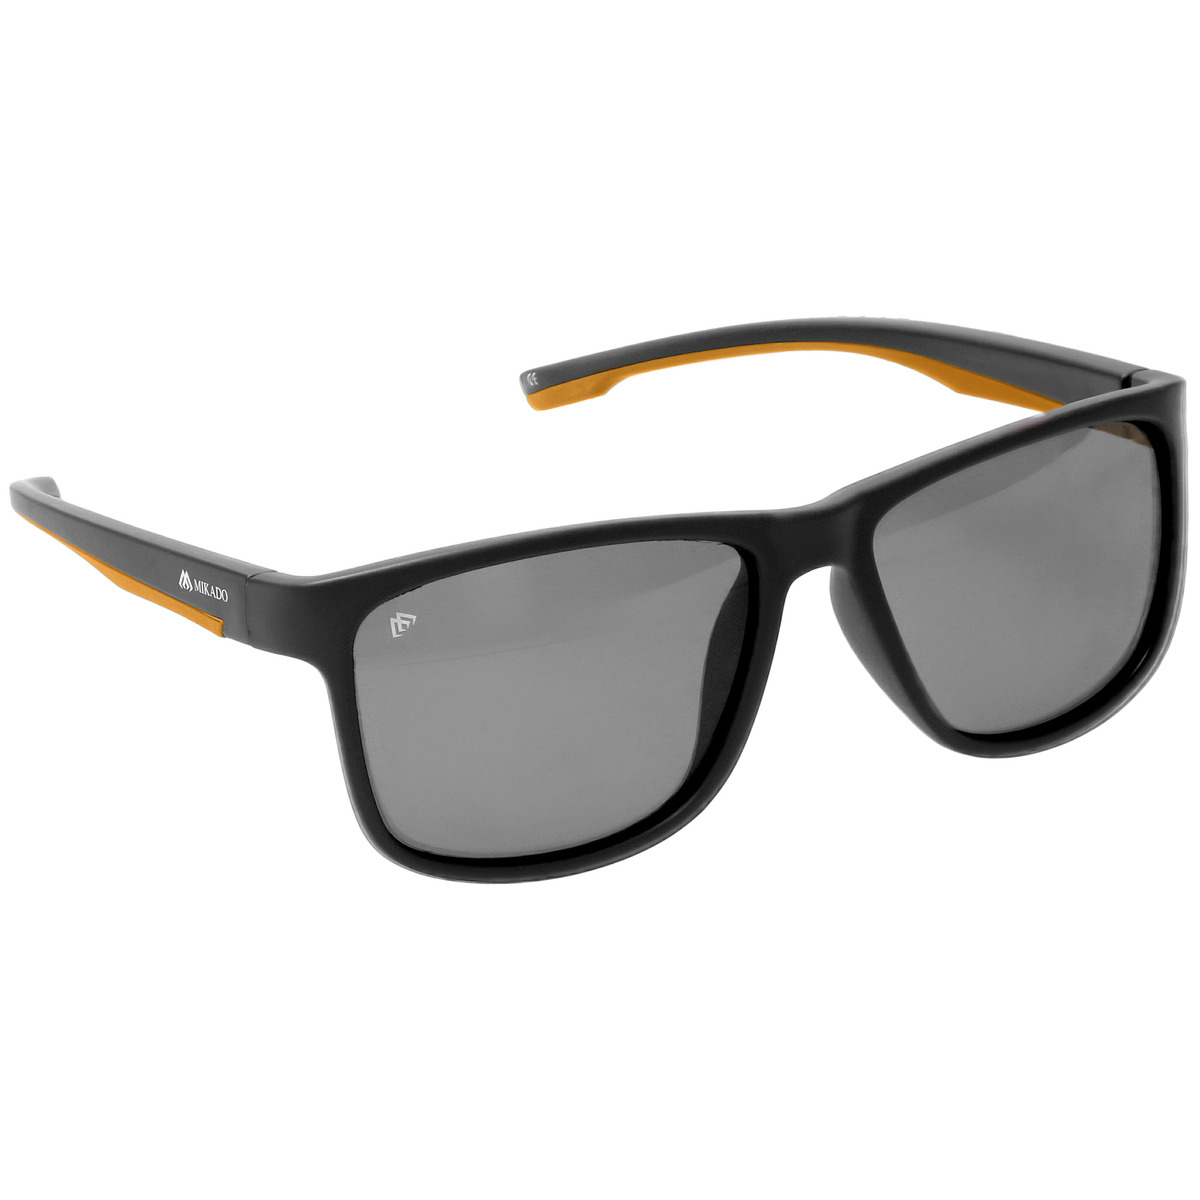 Mikado Sunglasses Polarized - 484 AMBER GREY